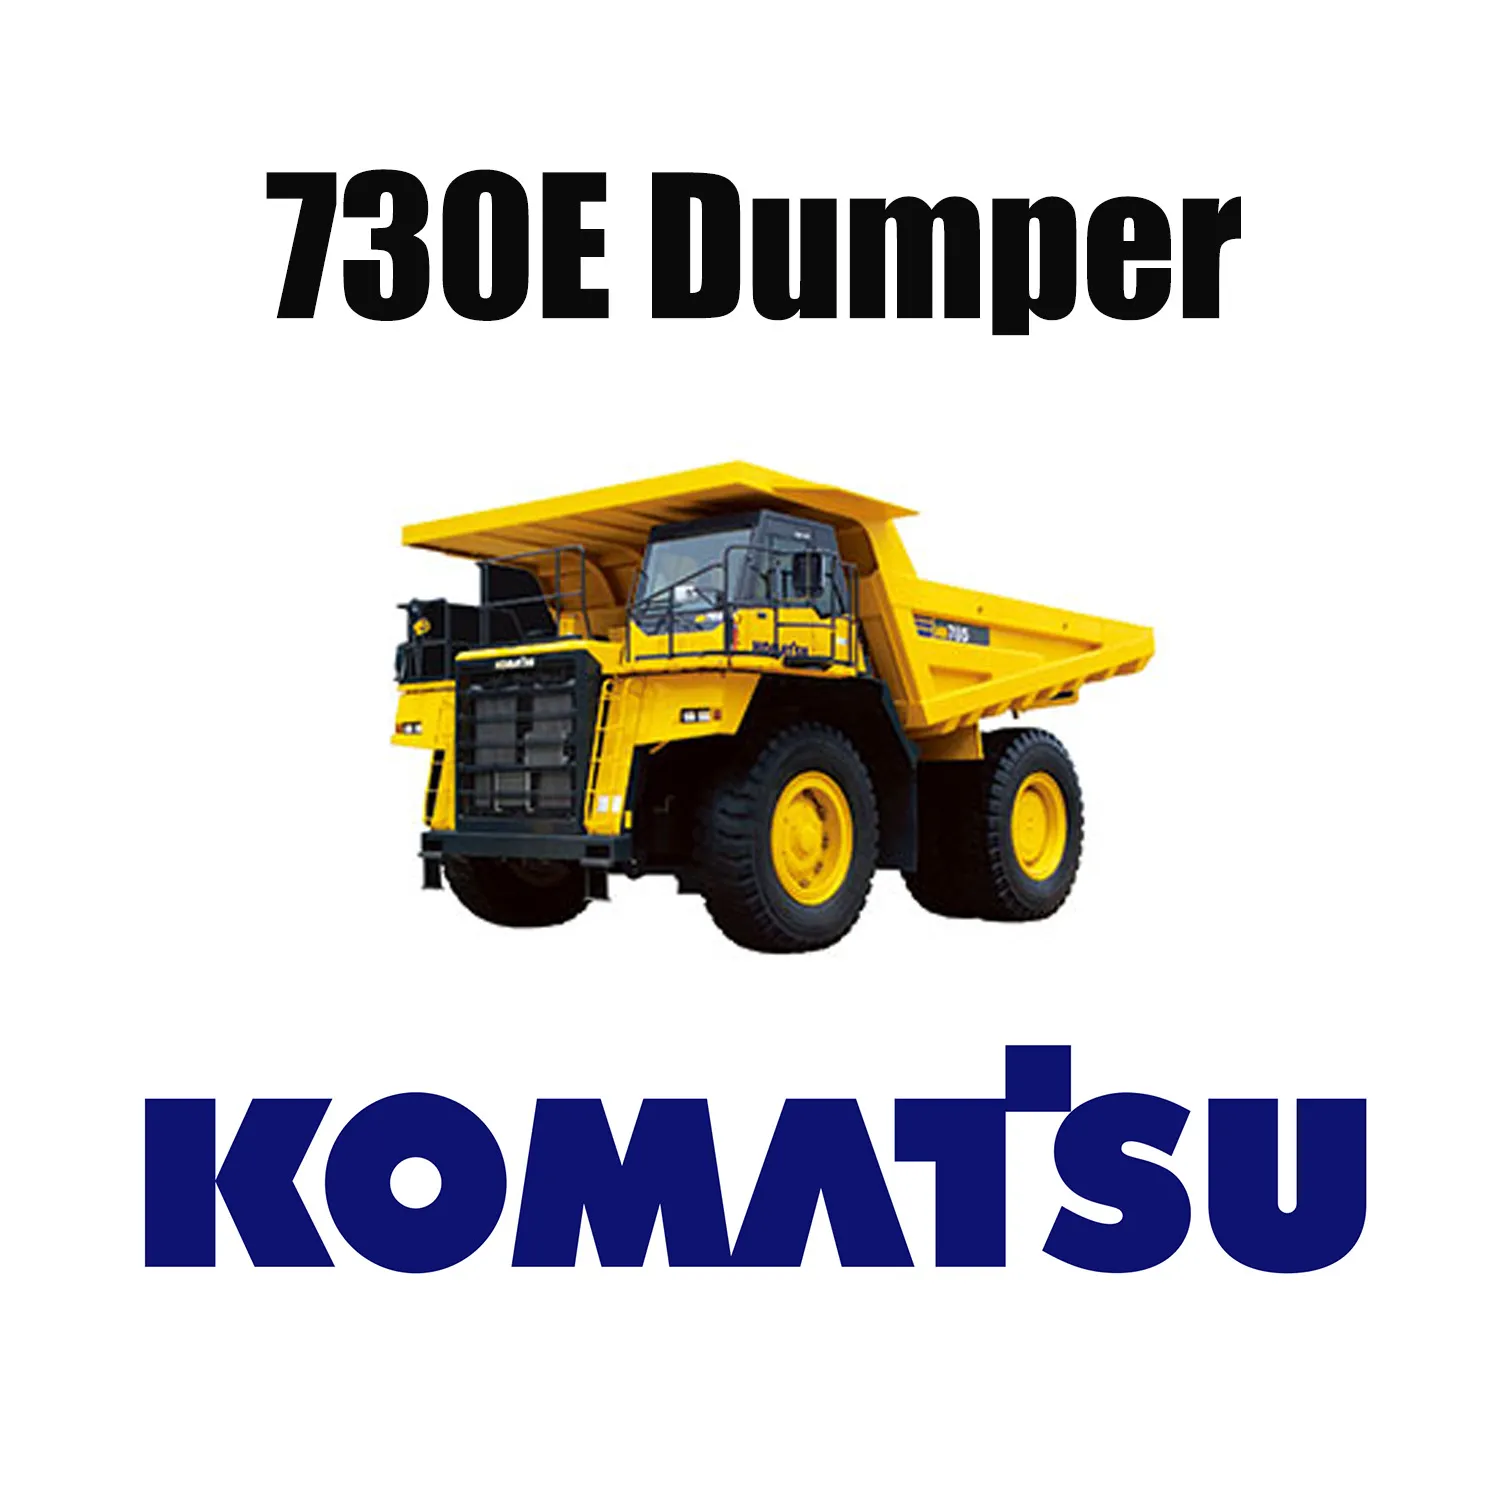 KOMATSU 730E Muldenkipper mit Giant 37.00R57 OTR Mining-Reifen